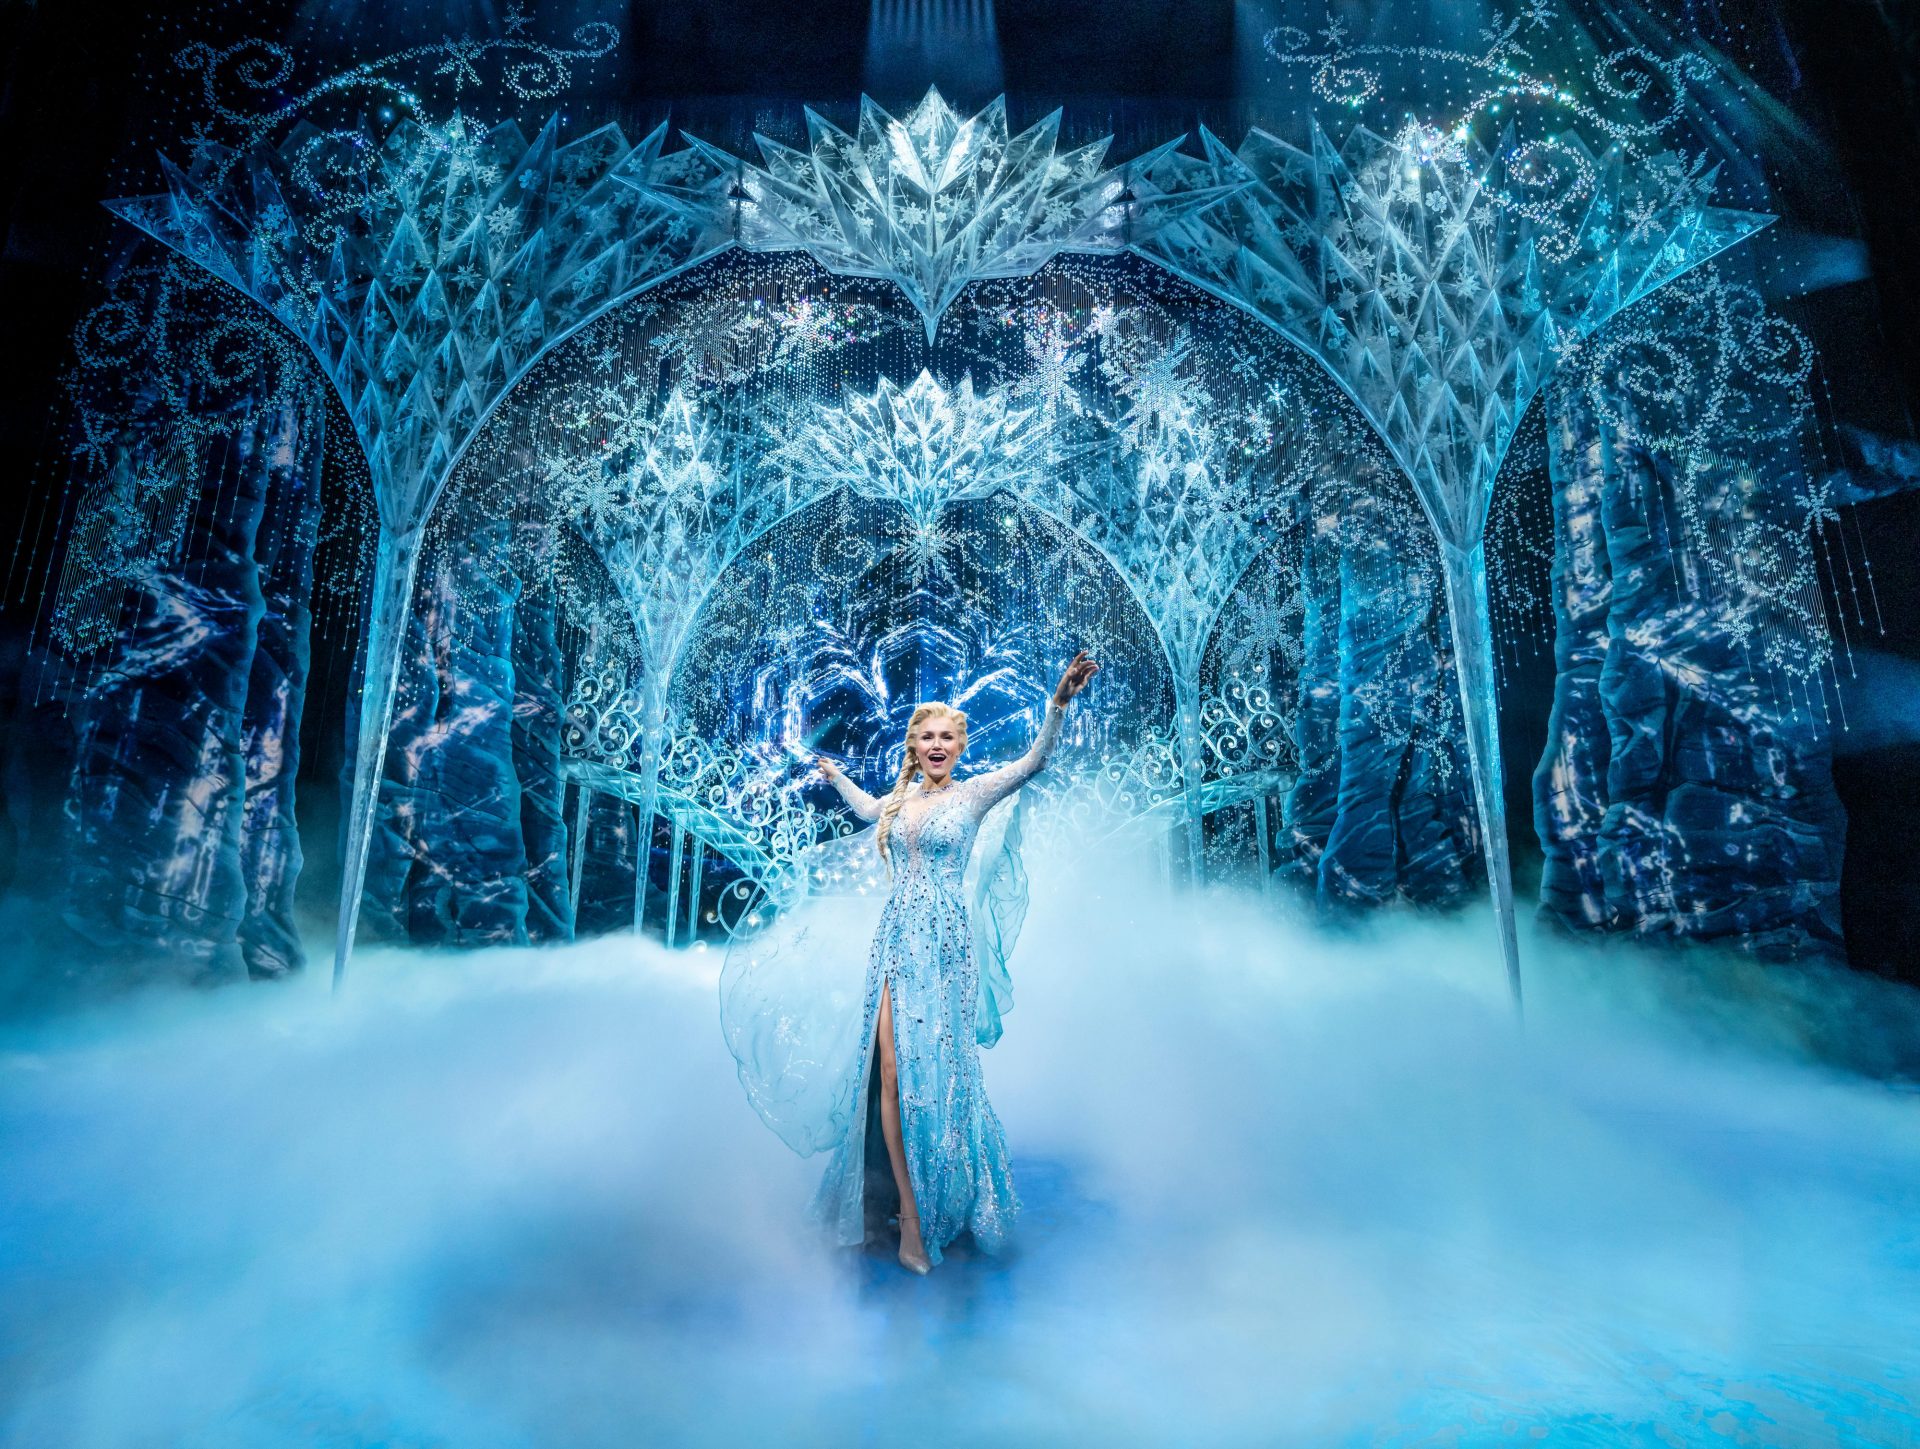 Samantha Barks as Elsa in Frozen. Credit: Johan Persson